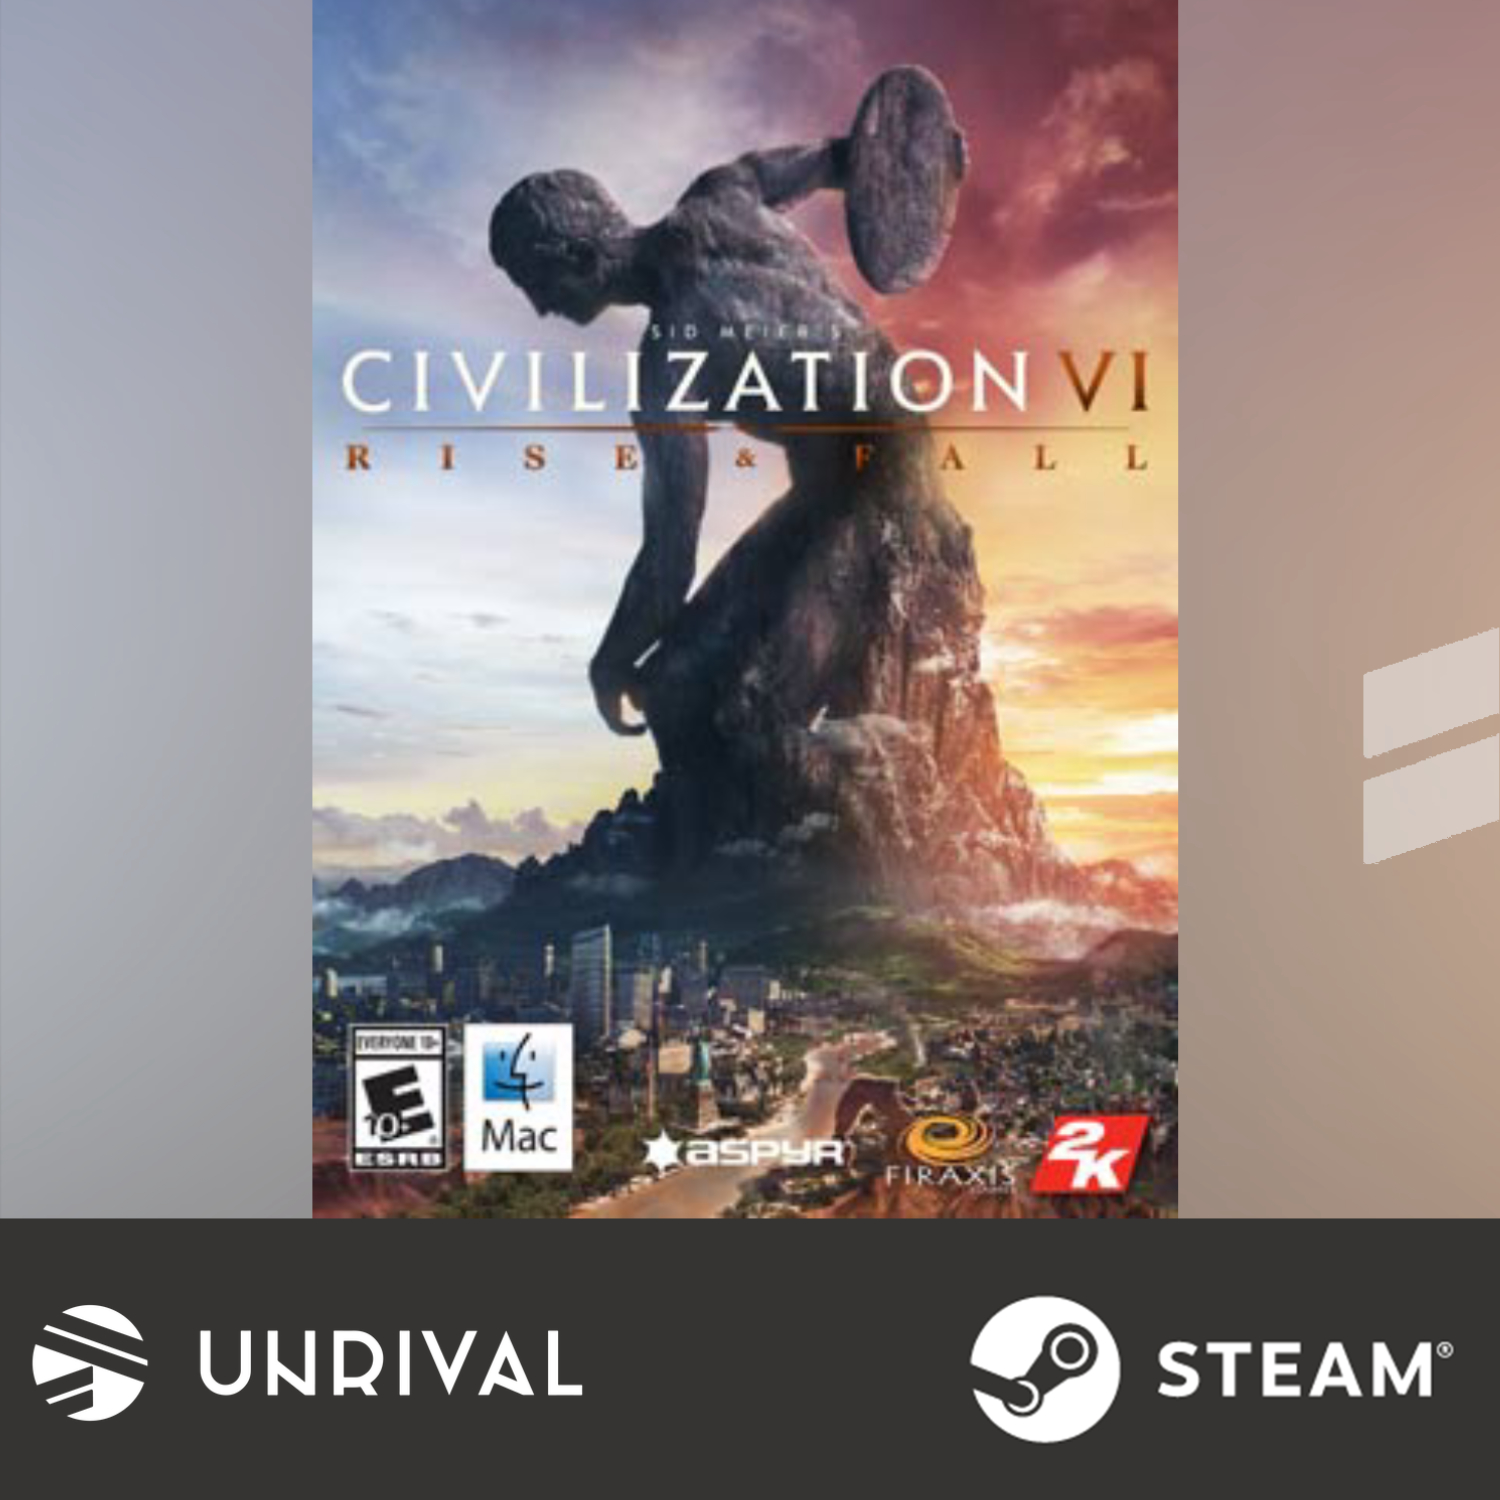 Sid Meier's Civilization® VI: Rise and Fall (Mac - Linux) PC Digital Download Game - Unrival